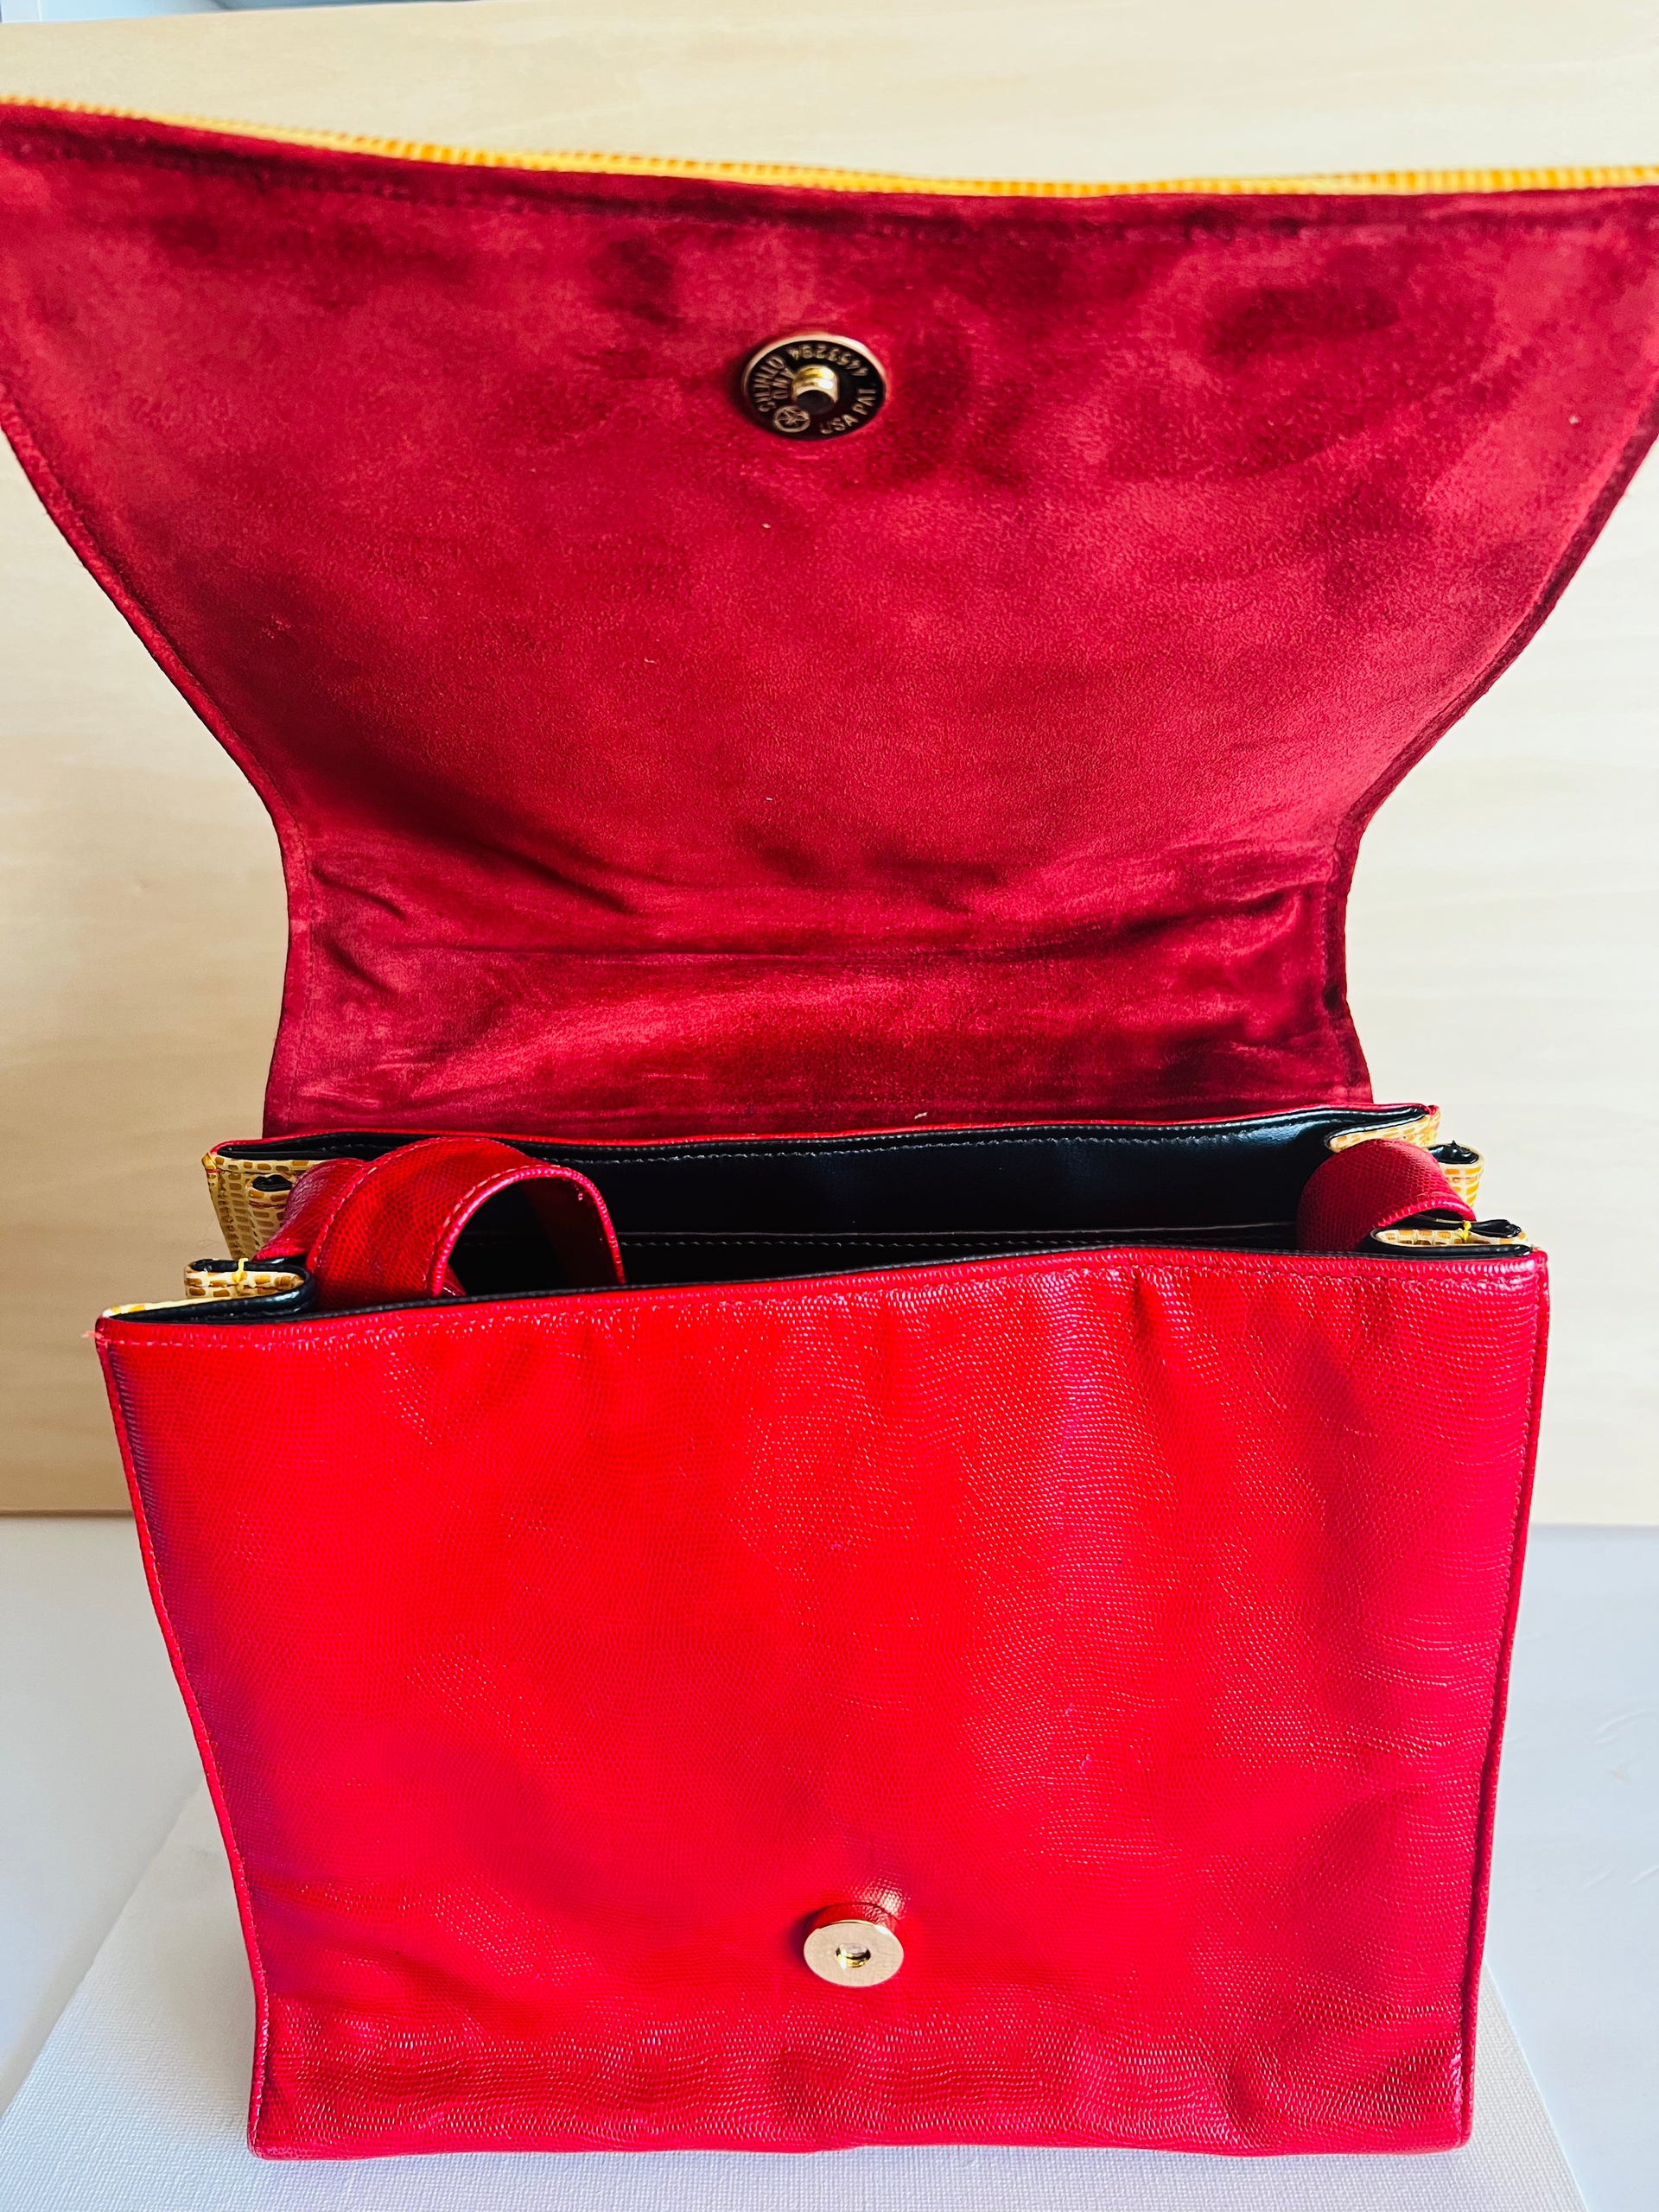 Wavy Colorful Vintage Sharif Handbag